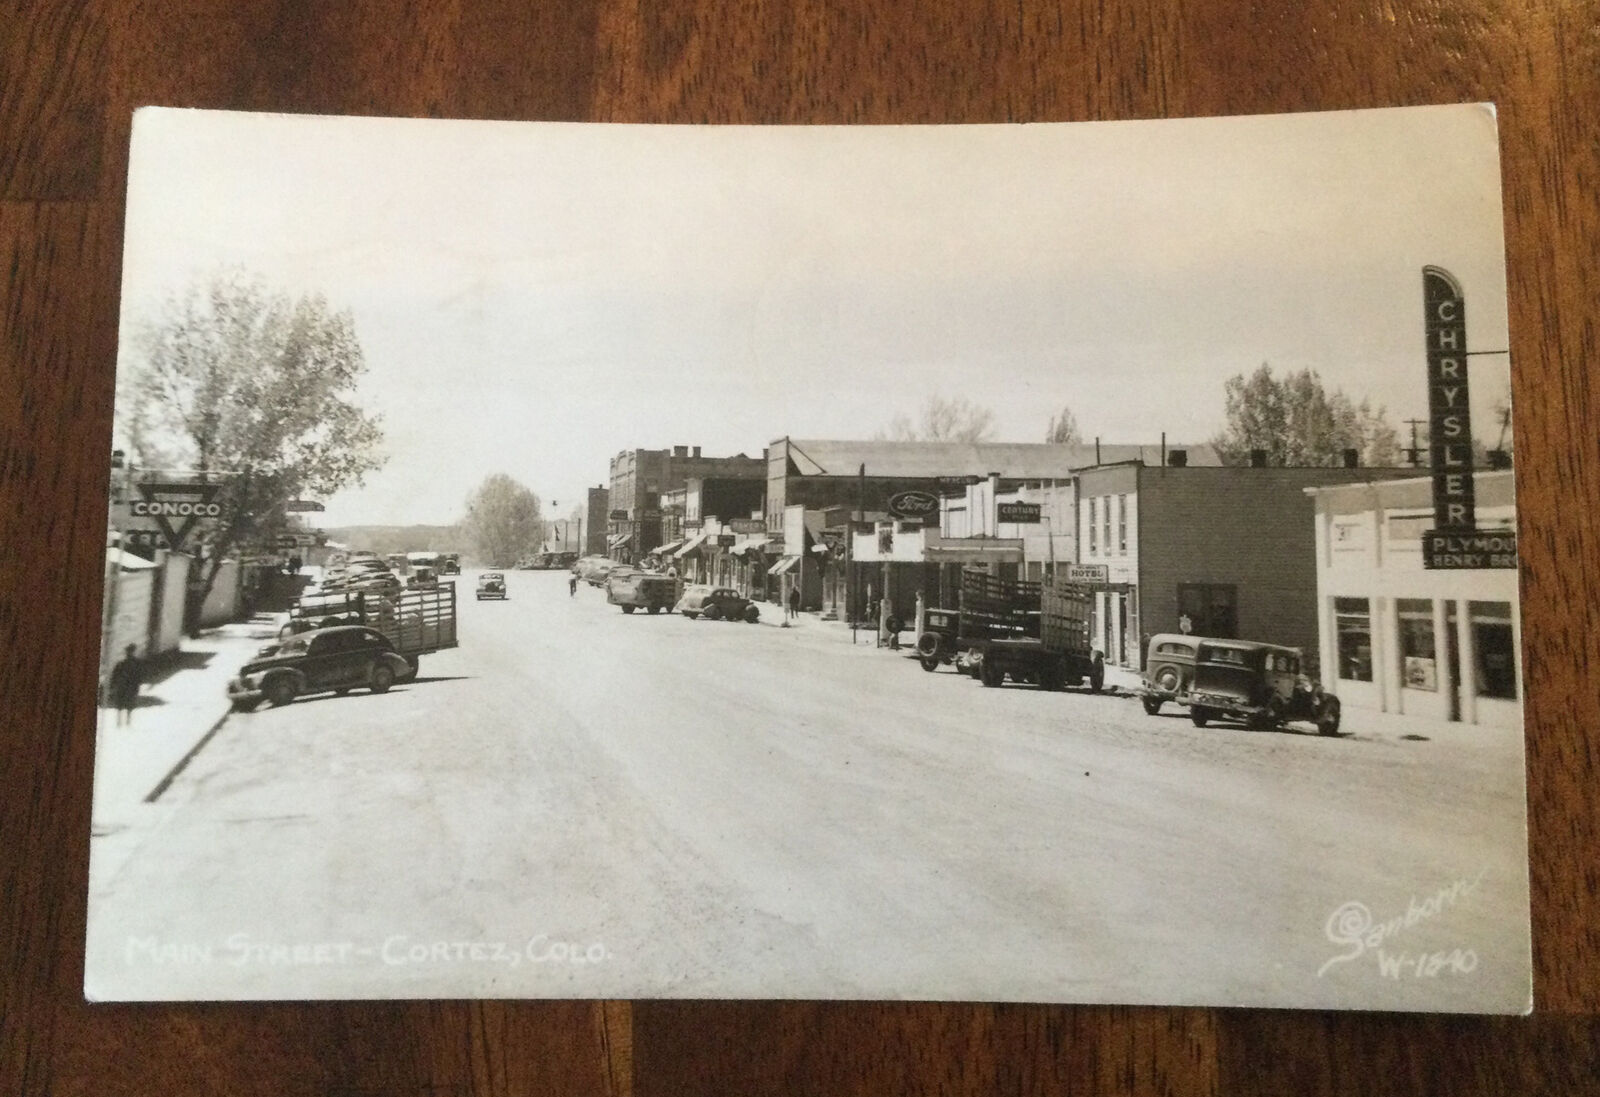 Main Street Cortez Colorado￼ Photo Postcard Vintage Chrysler Plymouth Ford